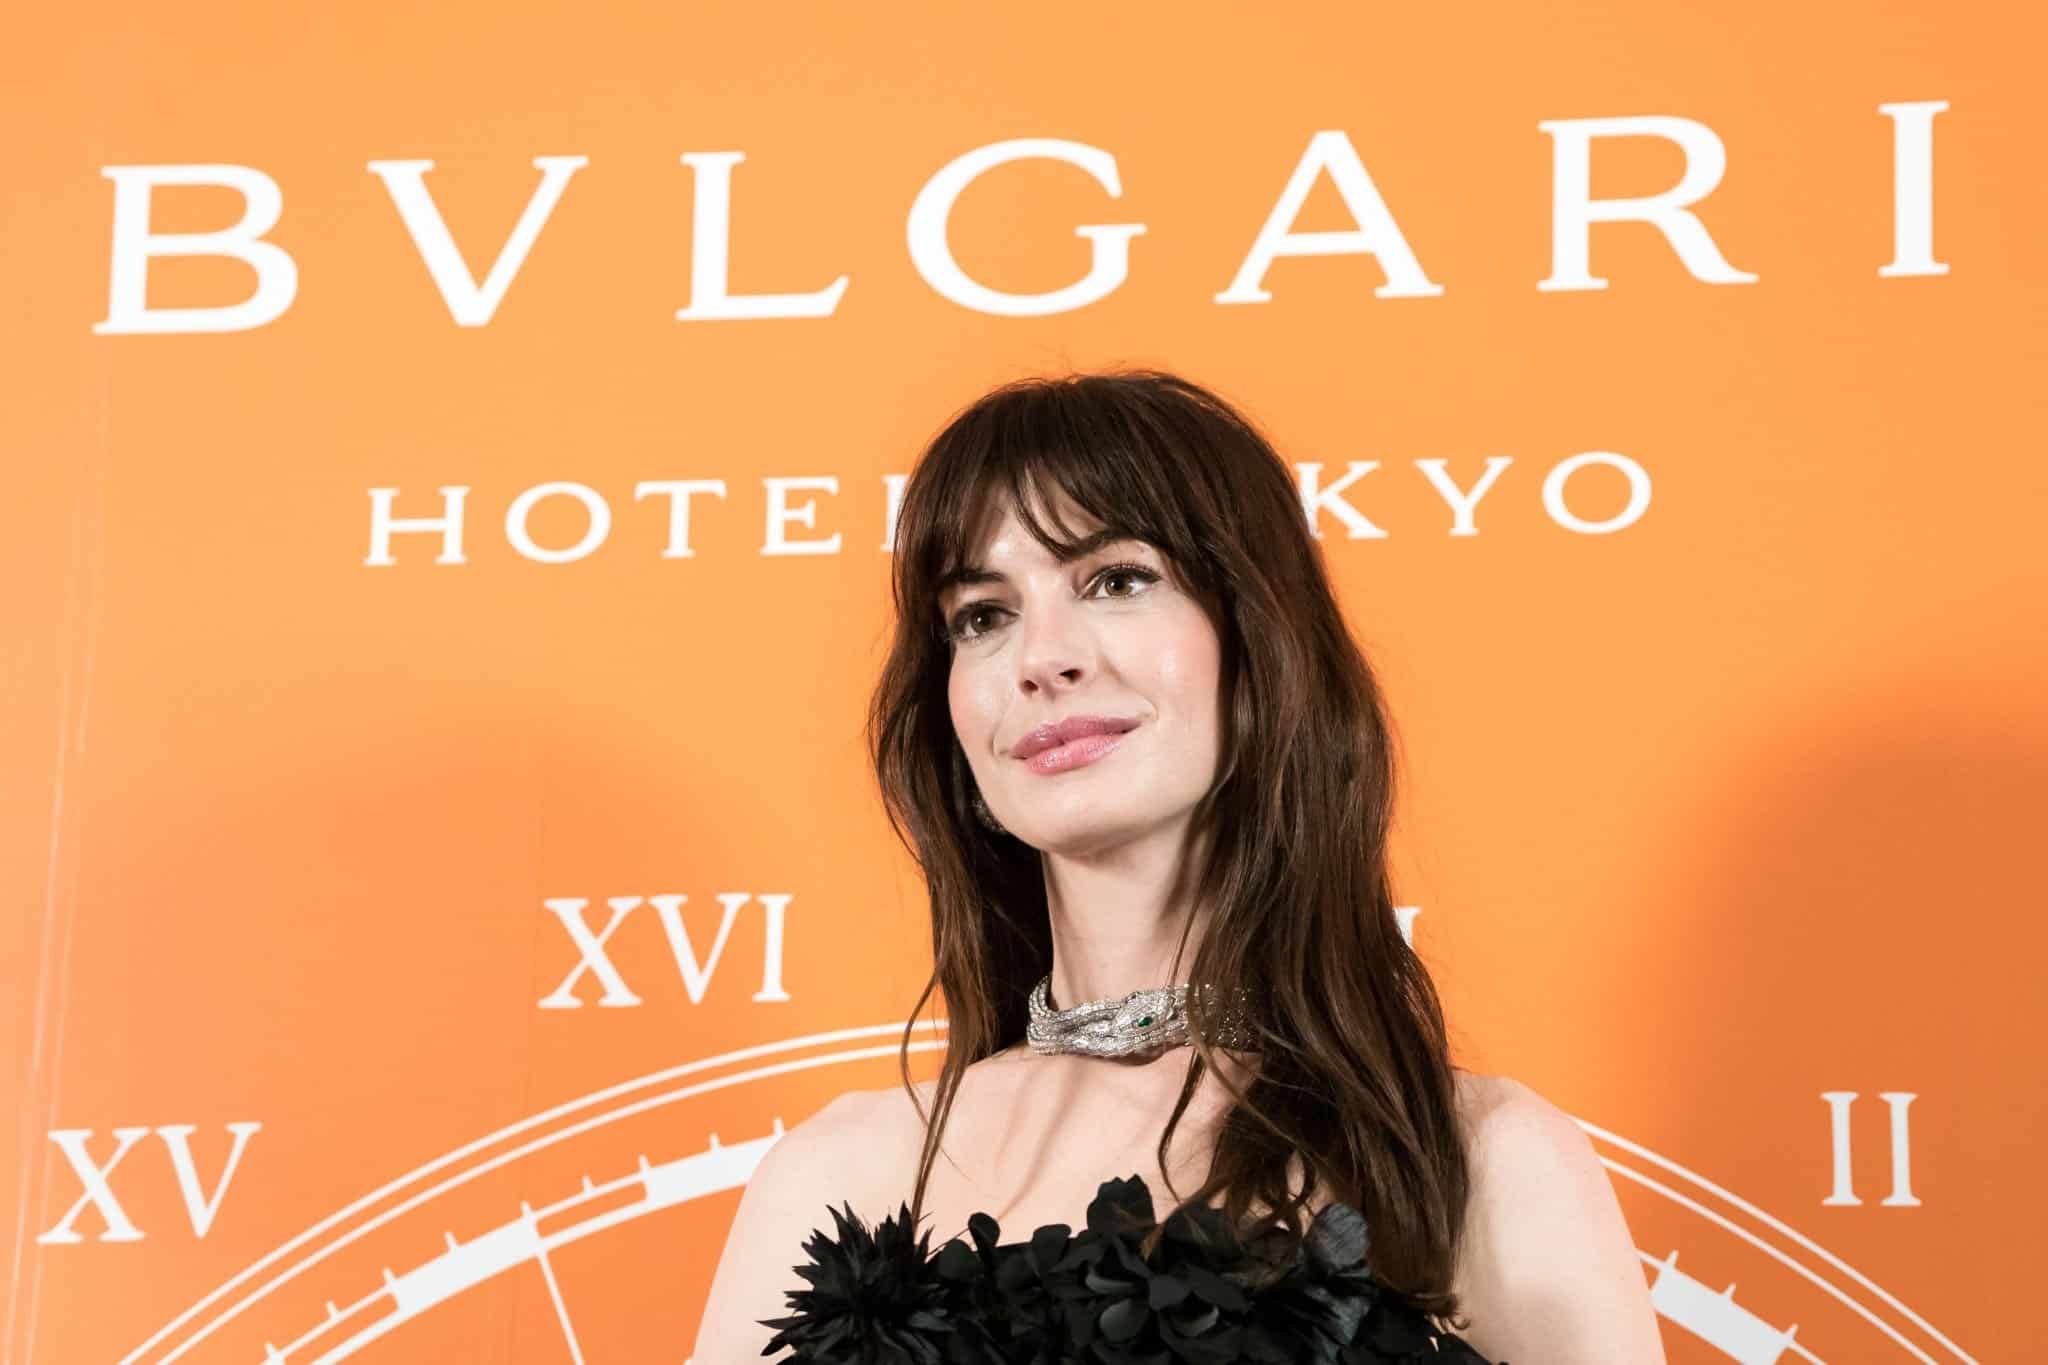 Anne Hathaway Attends Bvlgari Photoshoot in Black Mini Dress in Tokyo